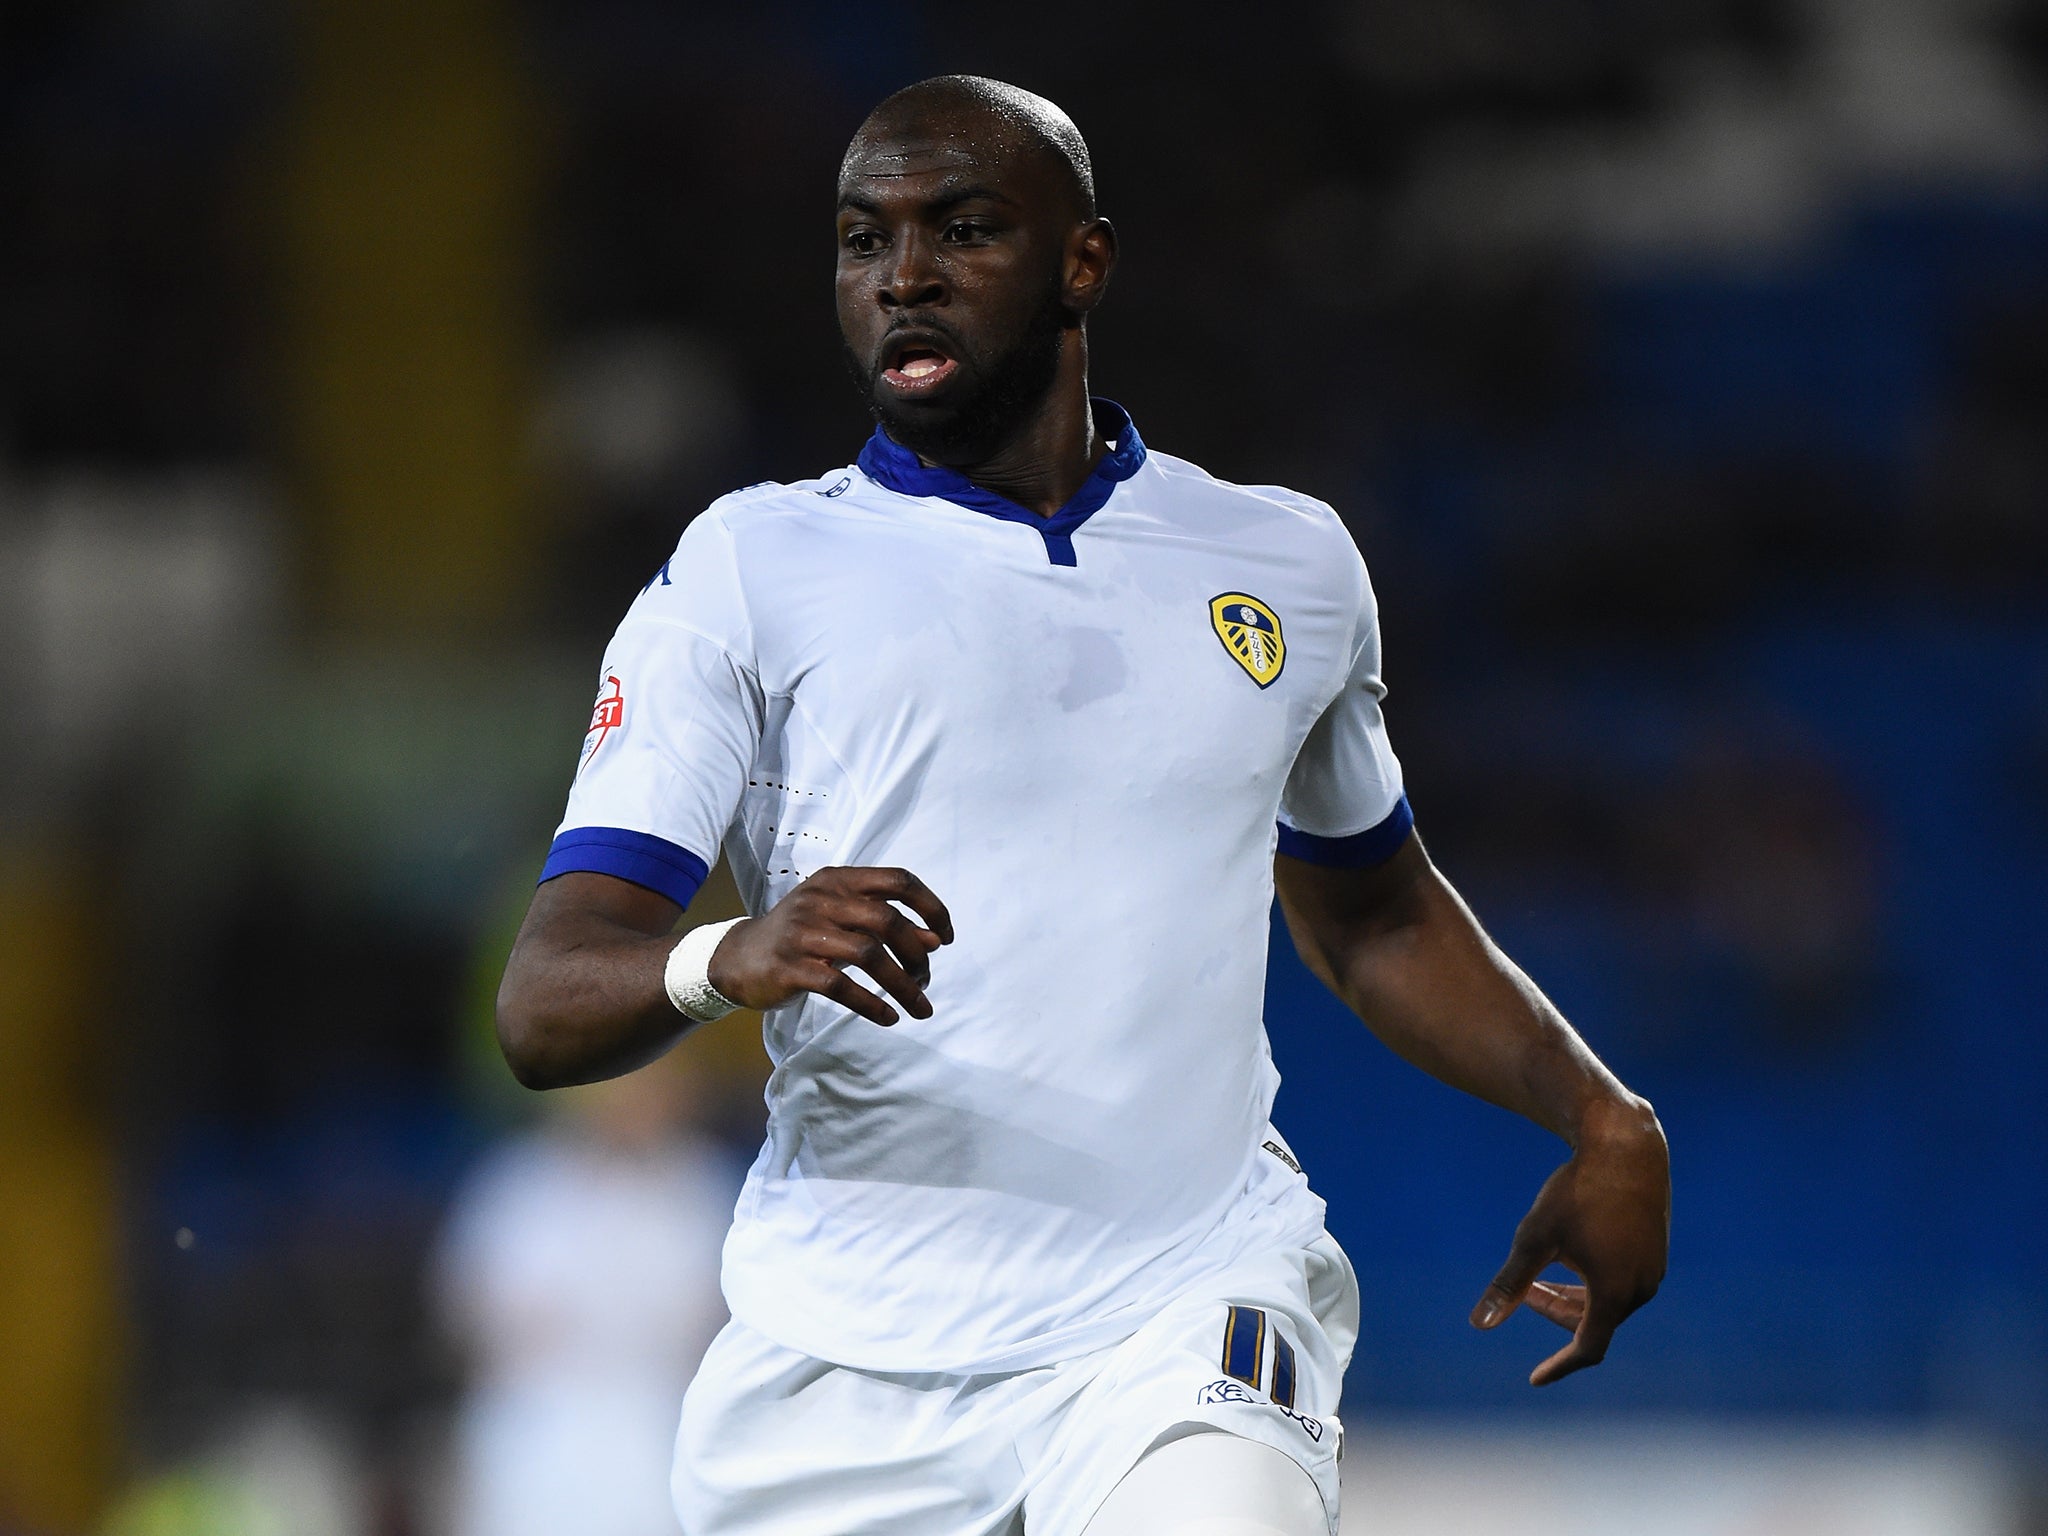 Leeds United striker Souleymane Doukara